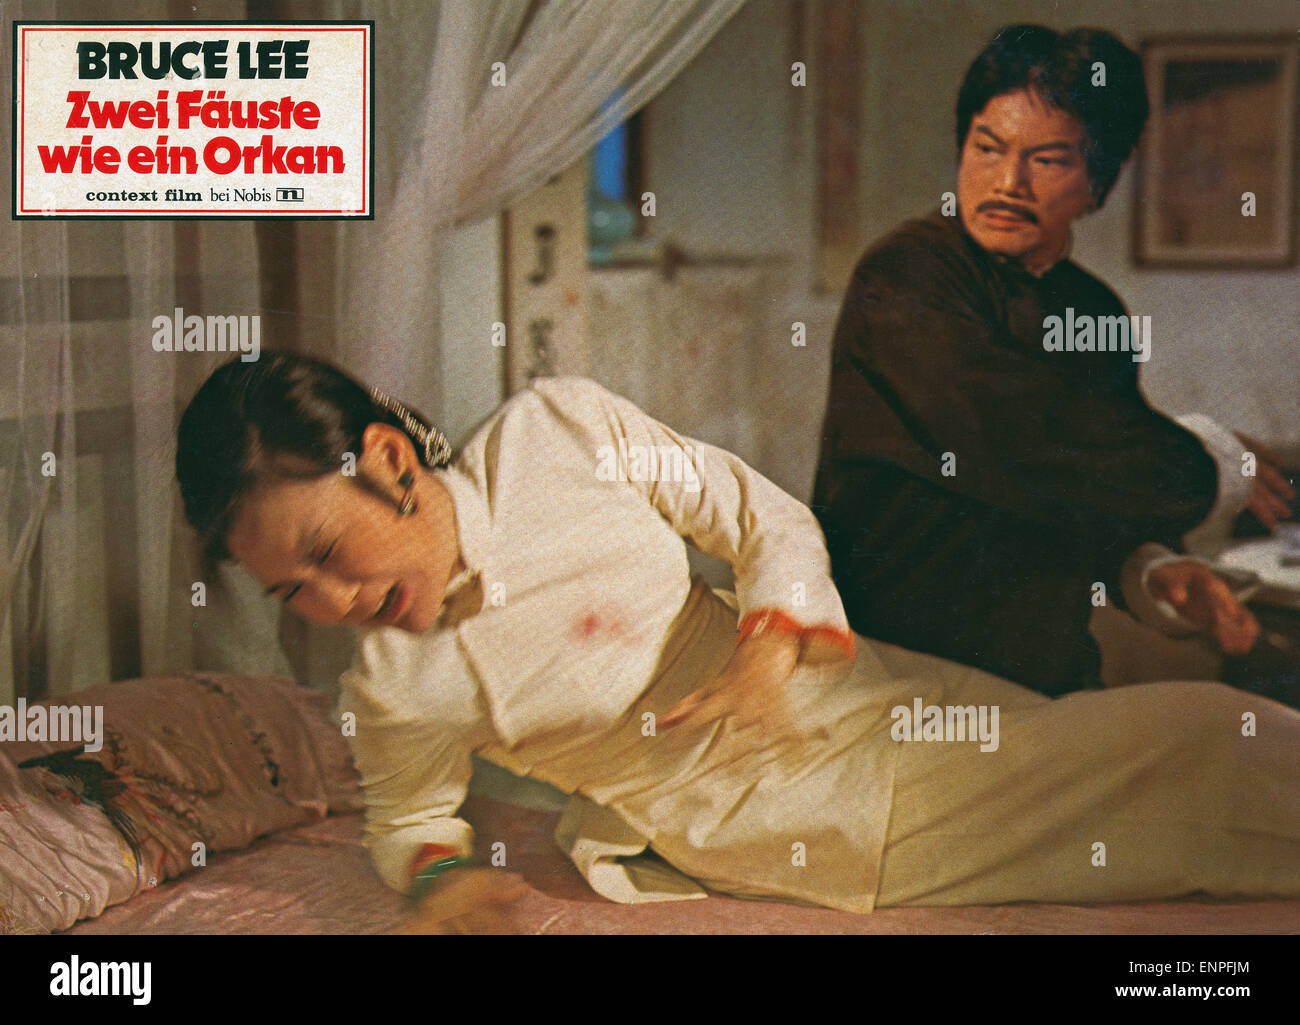 Da jiao long, aka: Bruce Lee - Zwei Fäuste wie ein Orkan, Hongkong 1974, Regie: Chien Lai, Szenenfoto Stock Photo